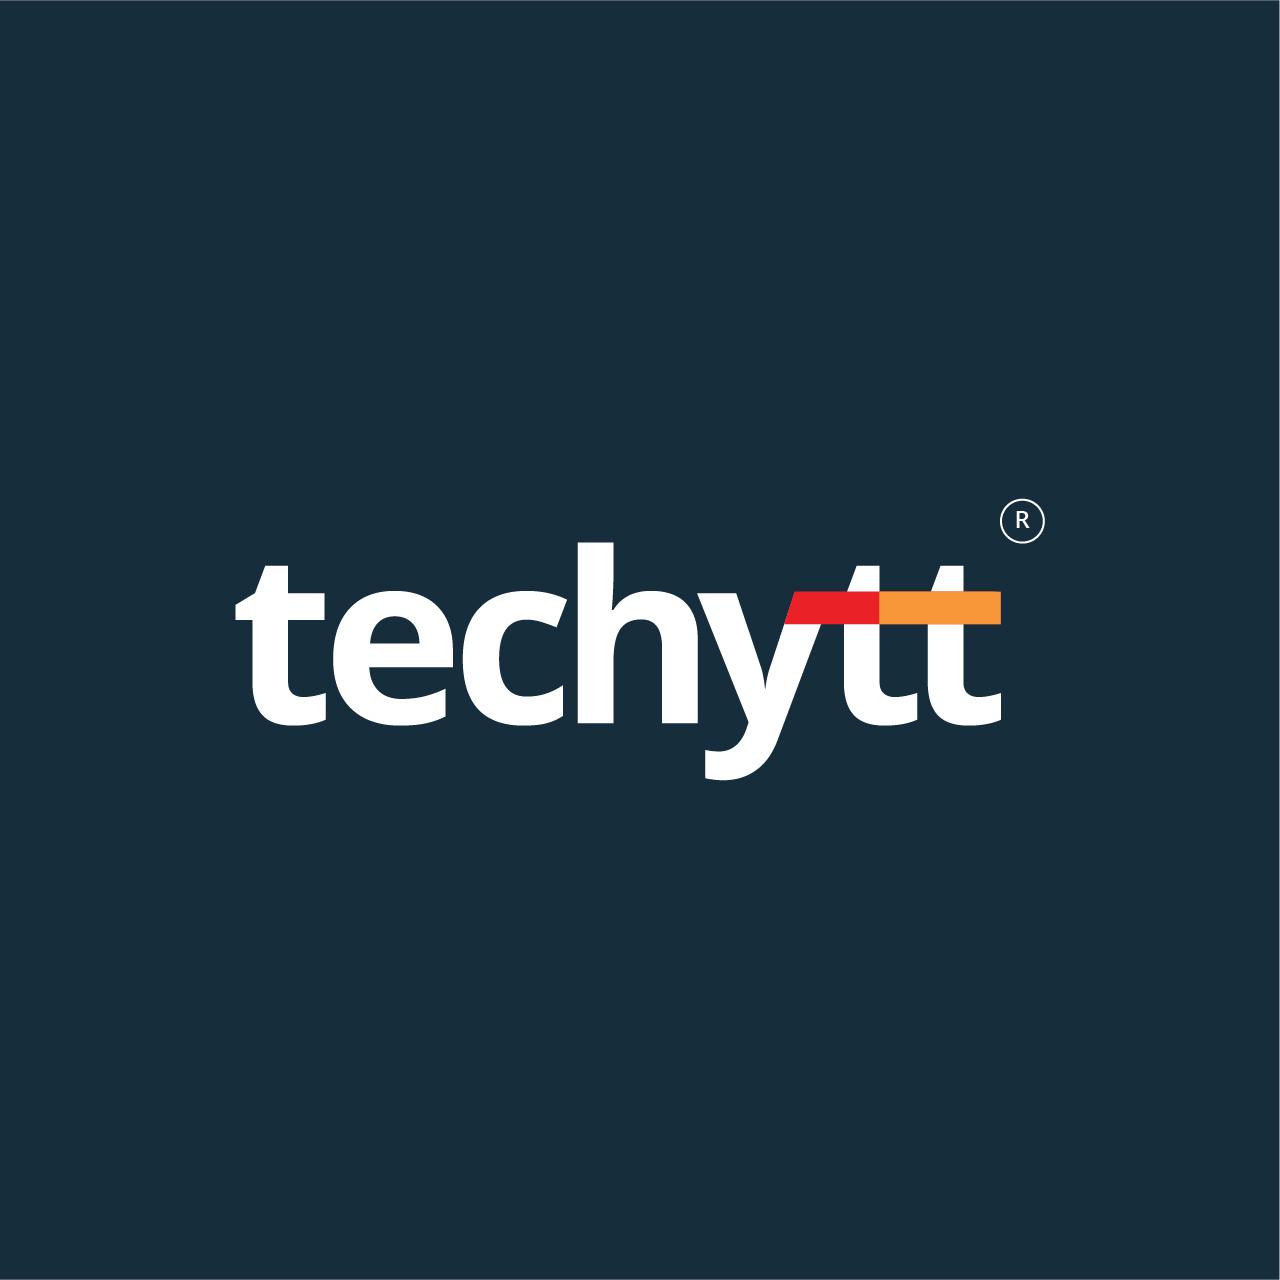 Techytt profile on Qualified.One